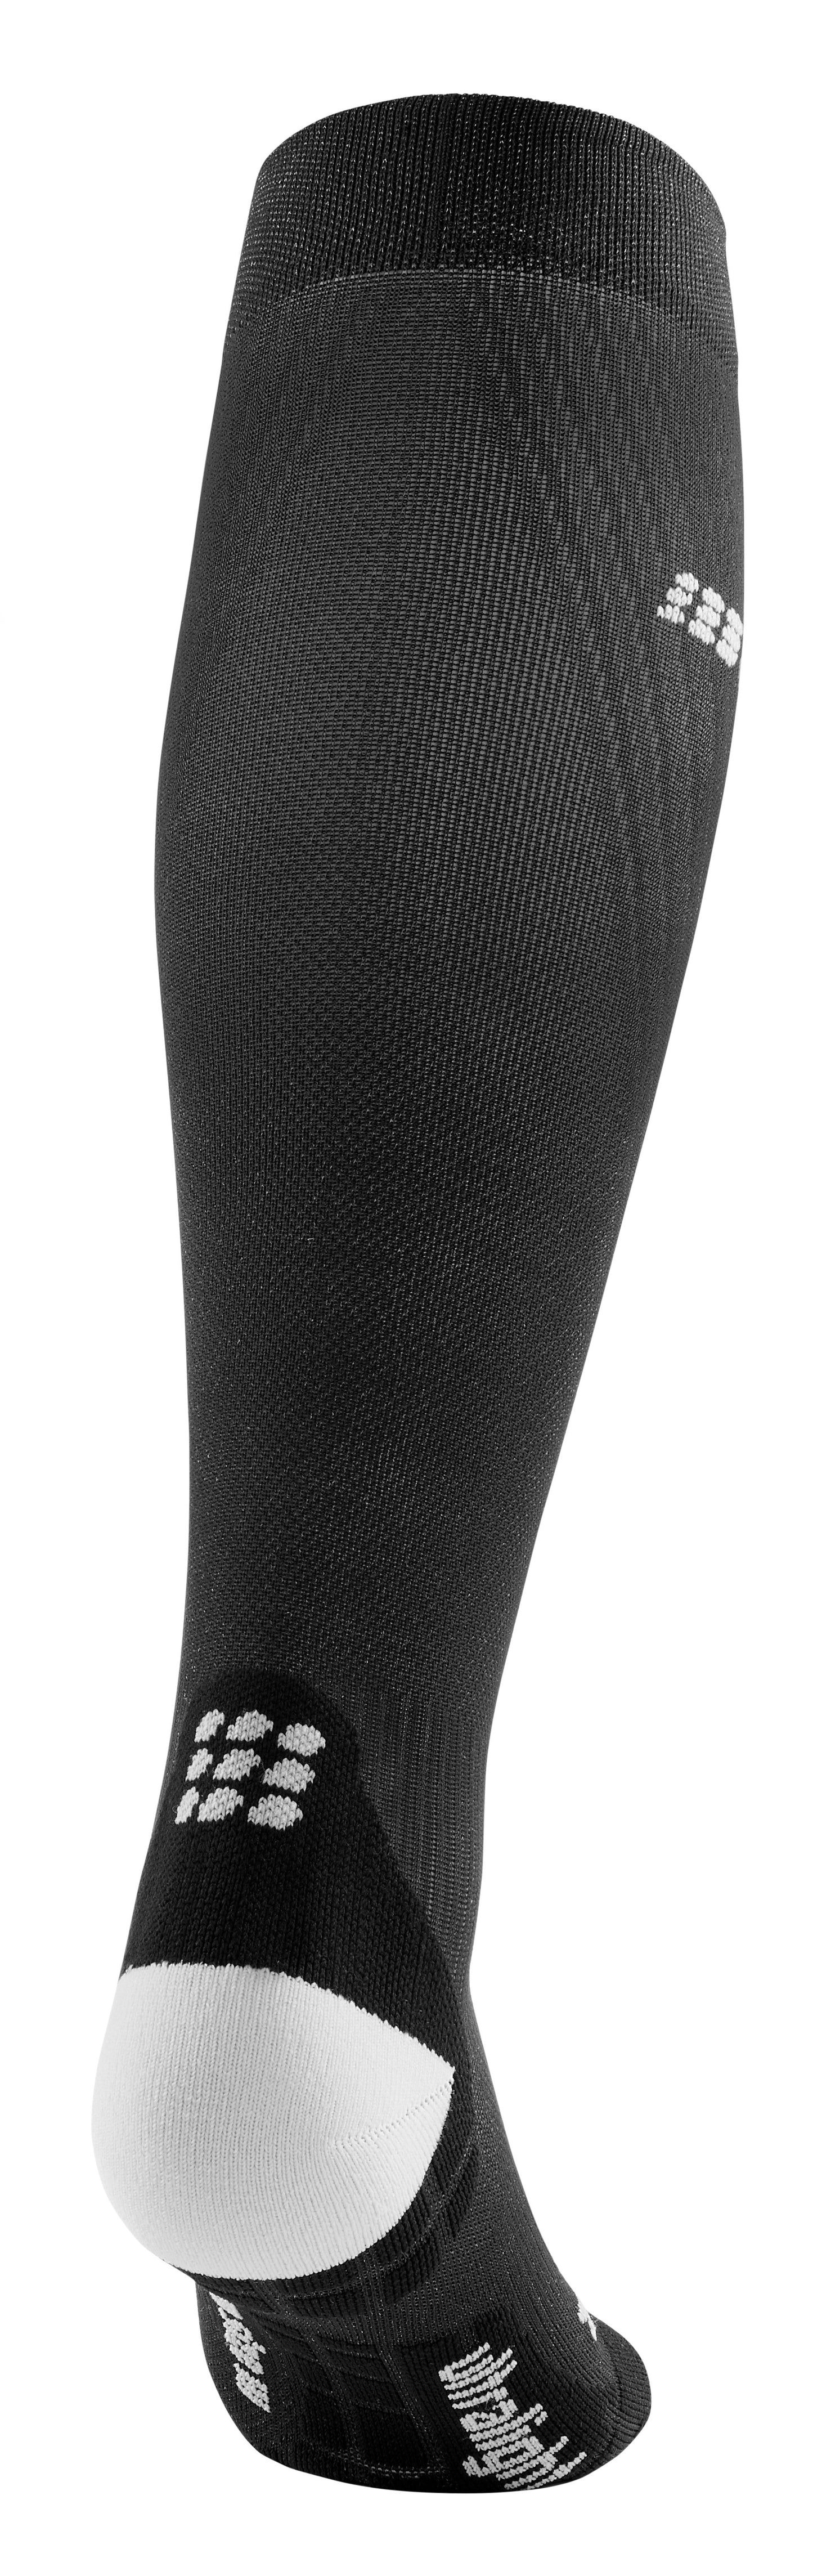 CEP Ultralight Compression Sock Tall Women's - Black/Light Gray